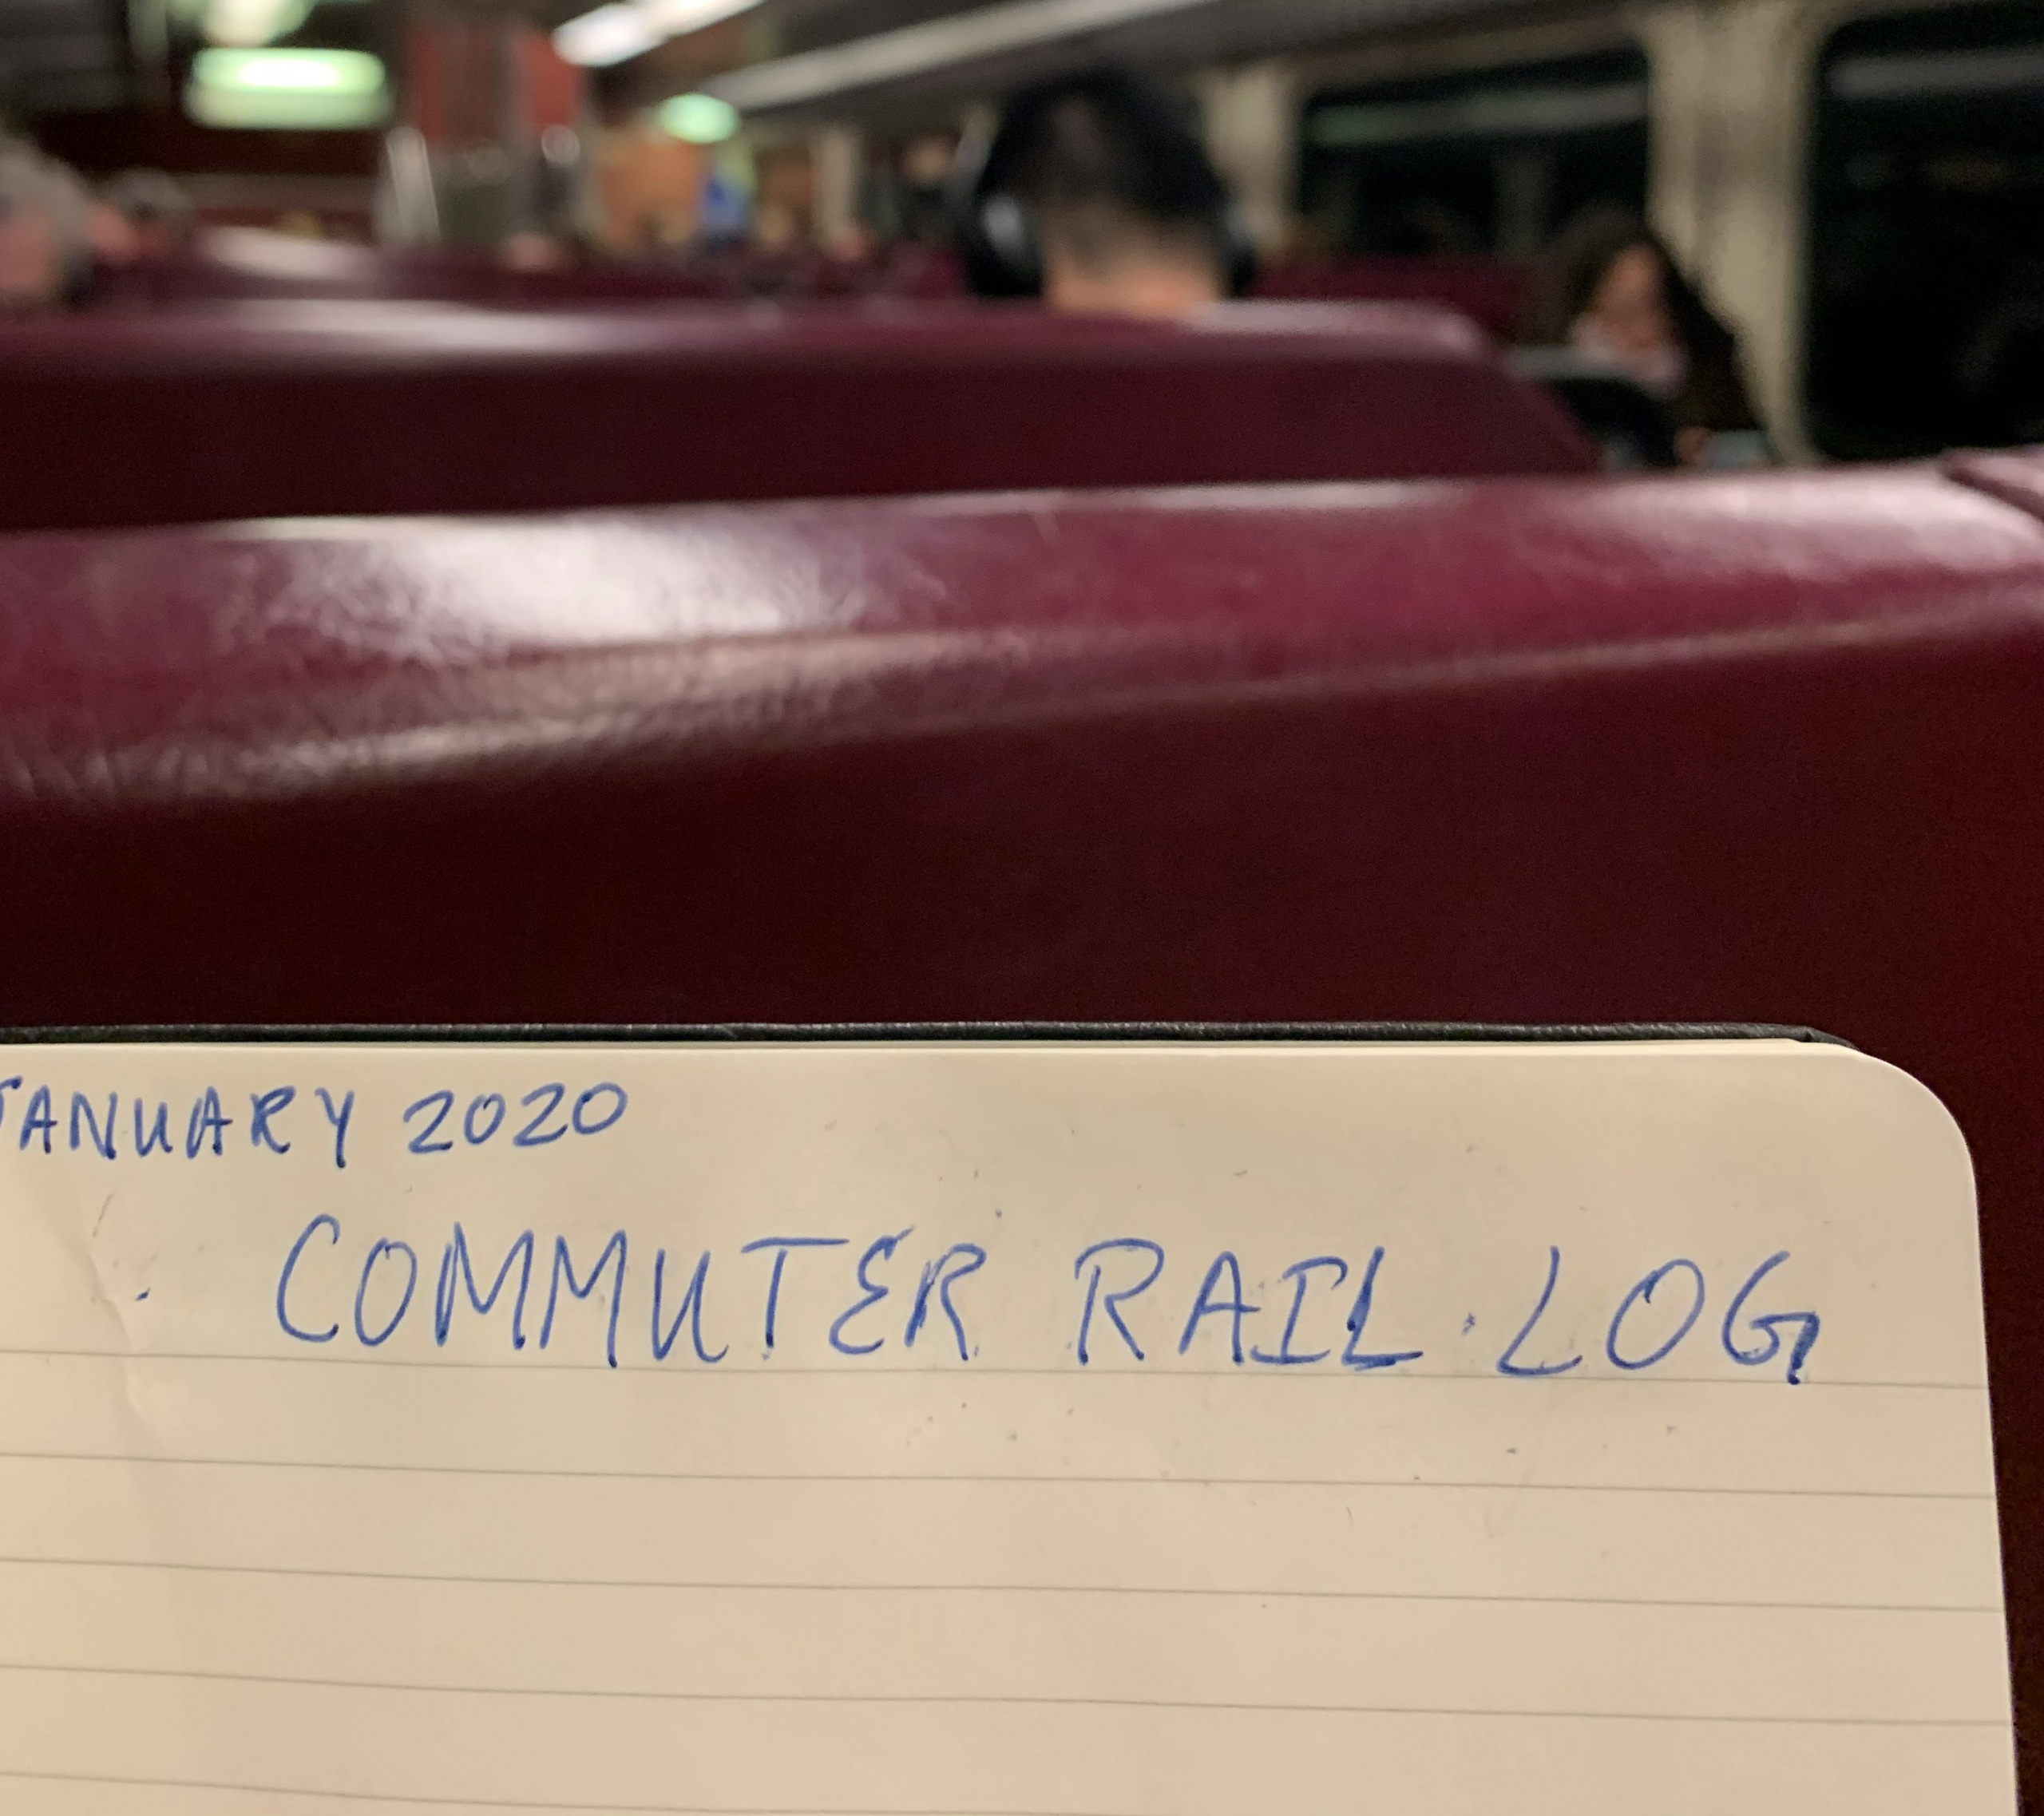 Boston commuter rail log